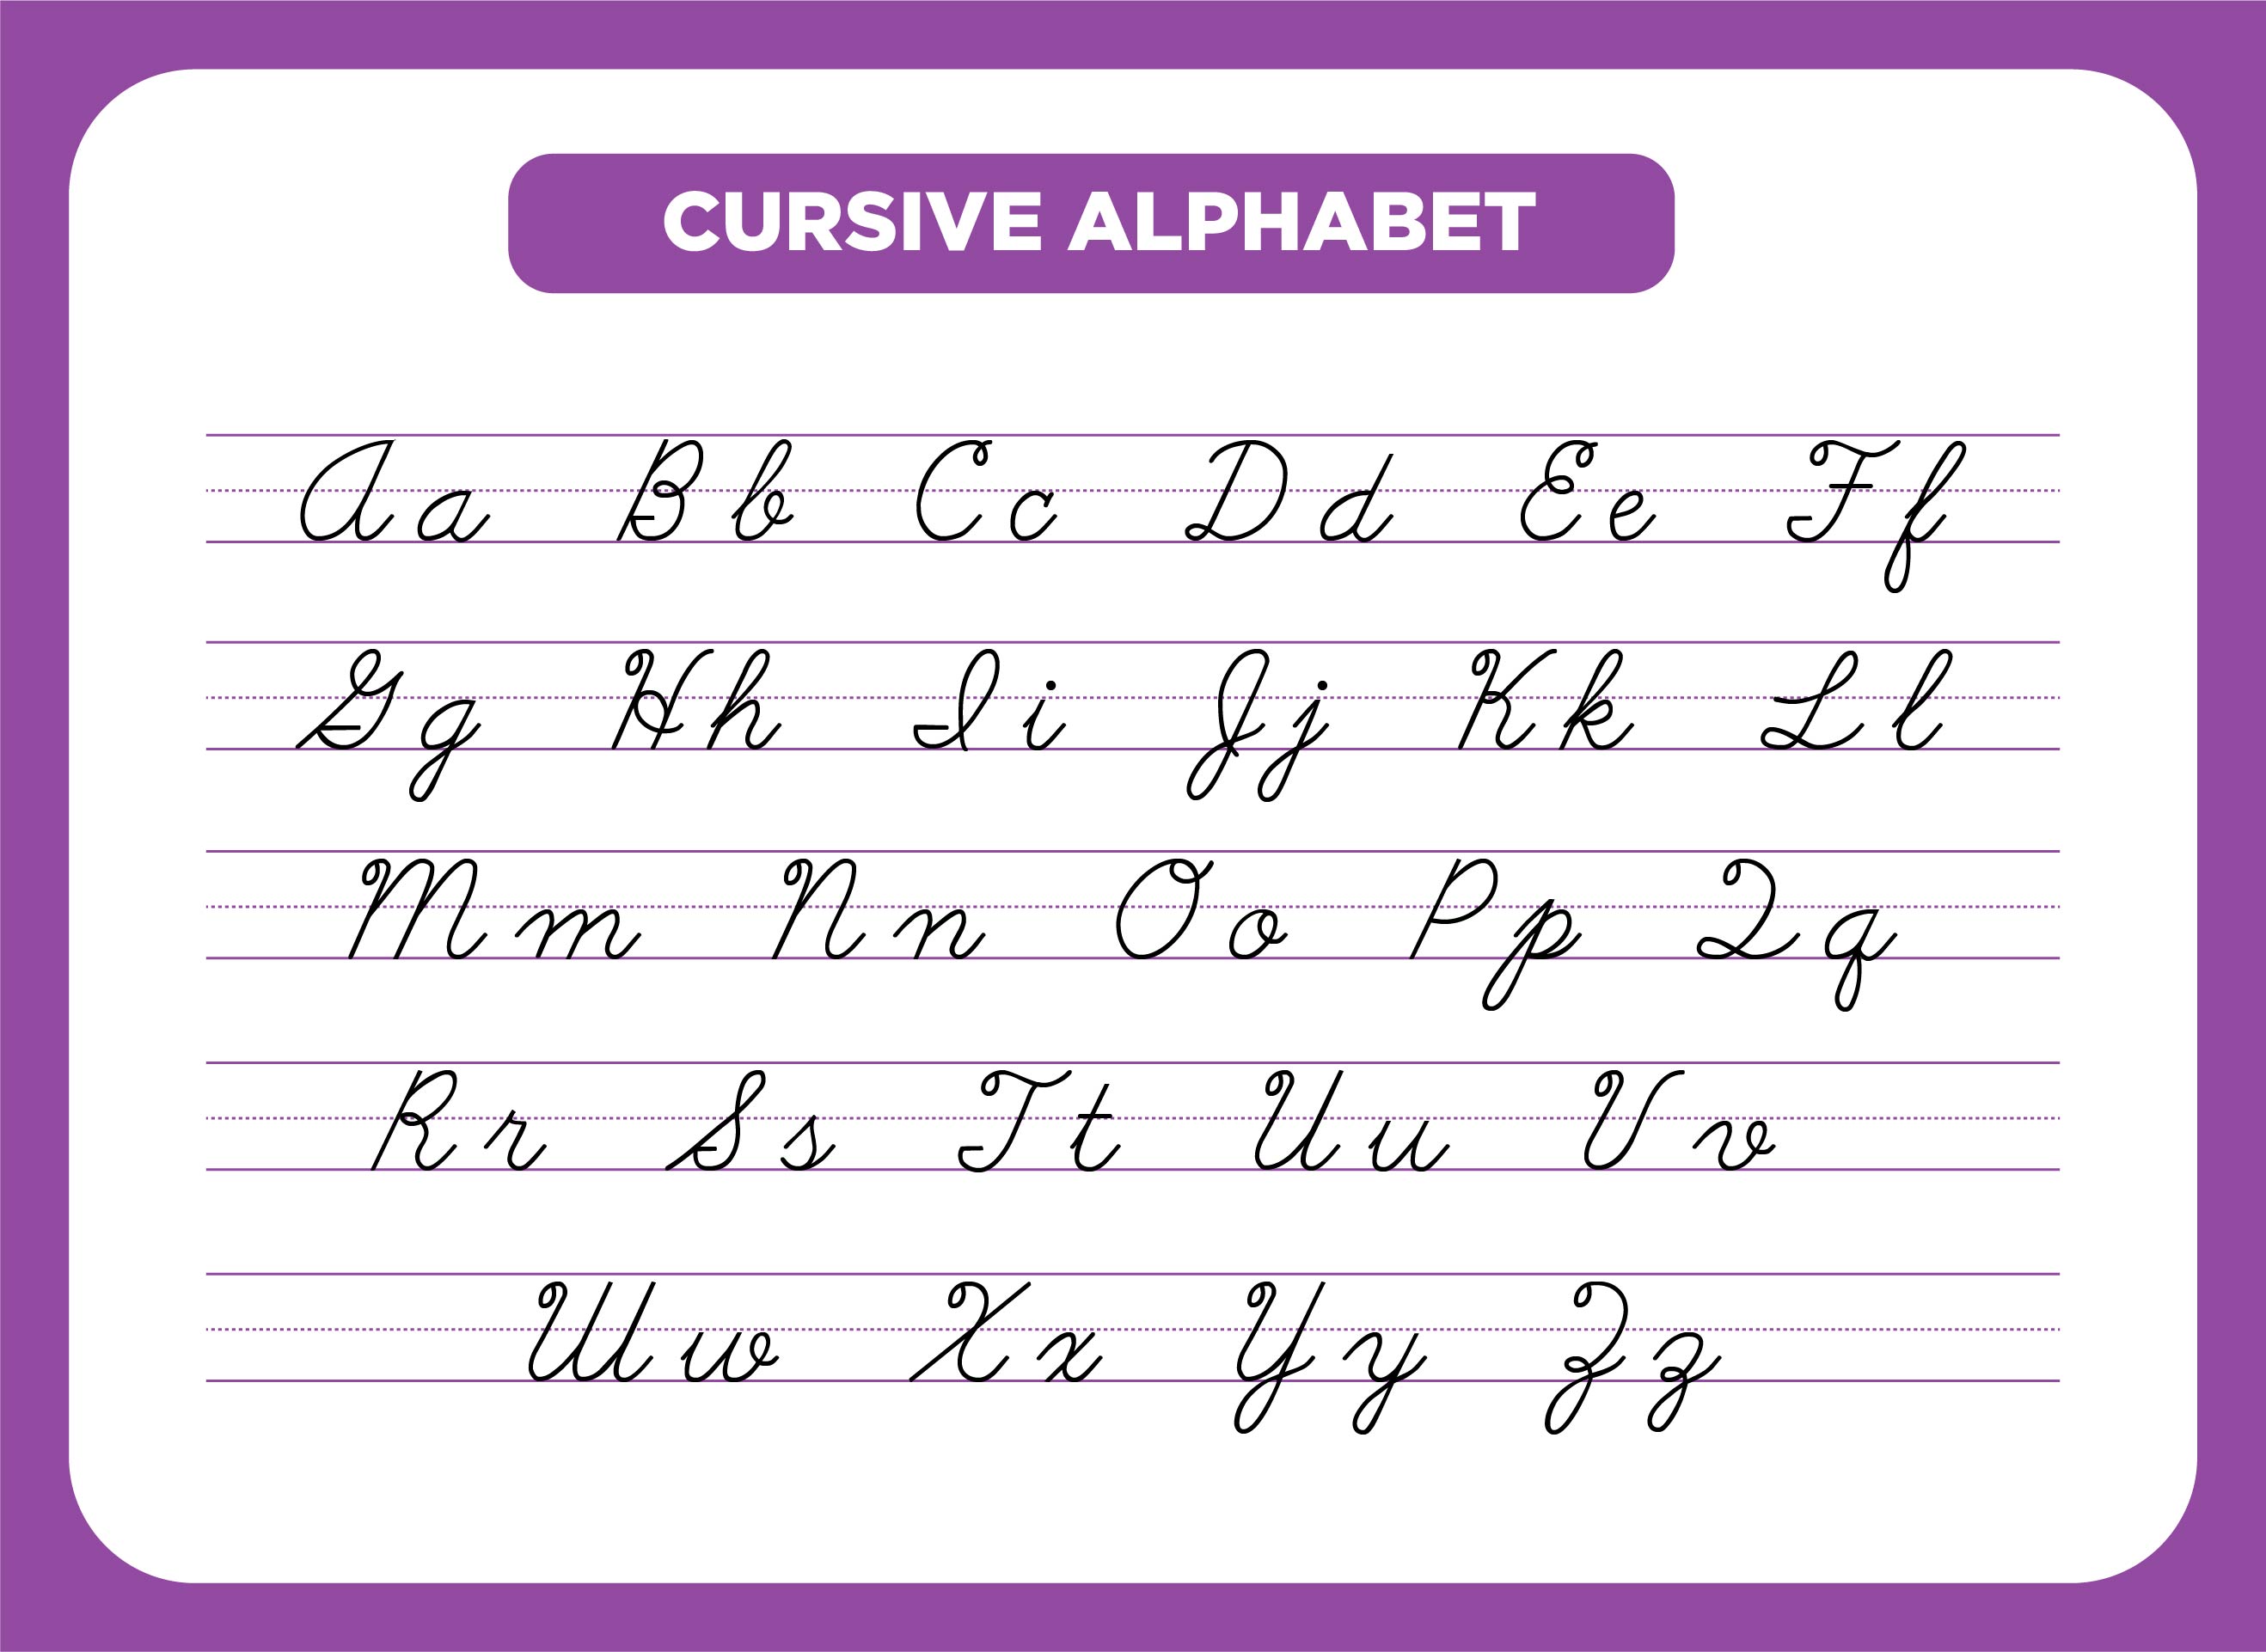 5 Best Images of Printable Cursive Alphabet - Free Printable Cursive